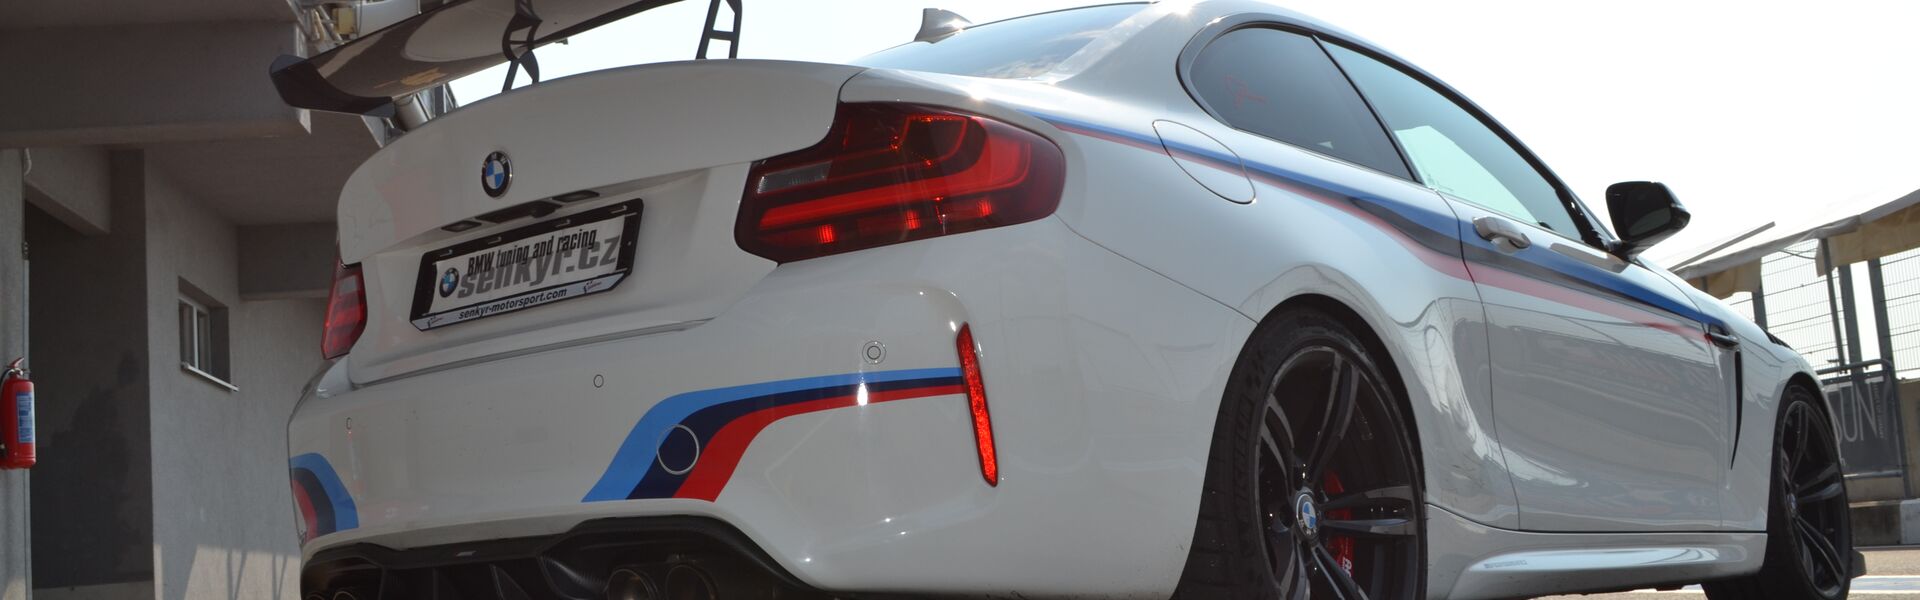 Bodykit/ Aerodynamické prvky pro automobil BMW M3 E46